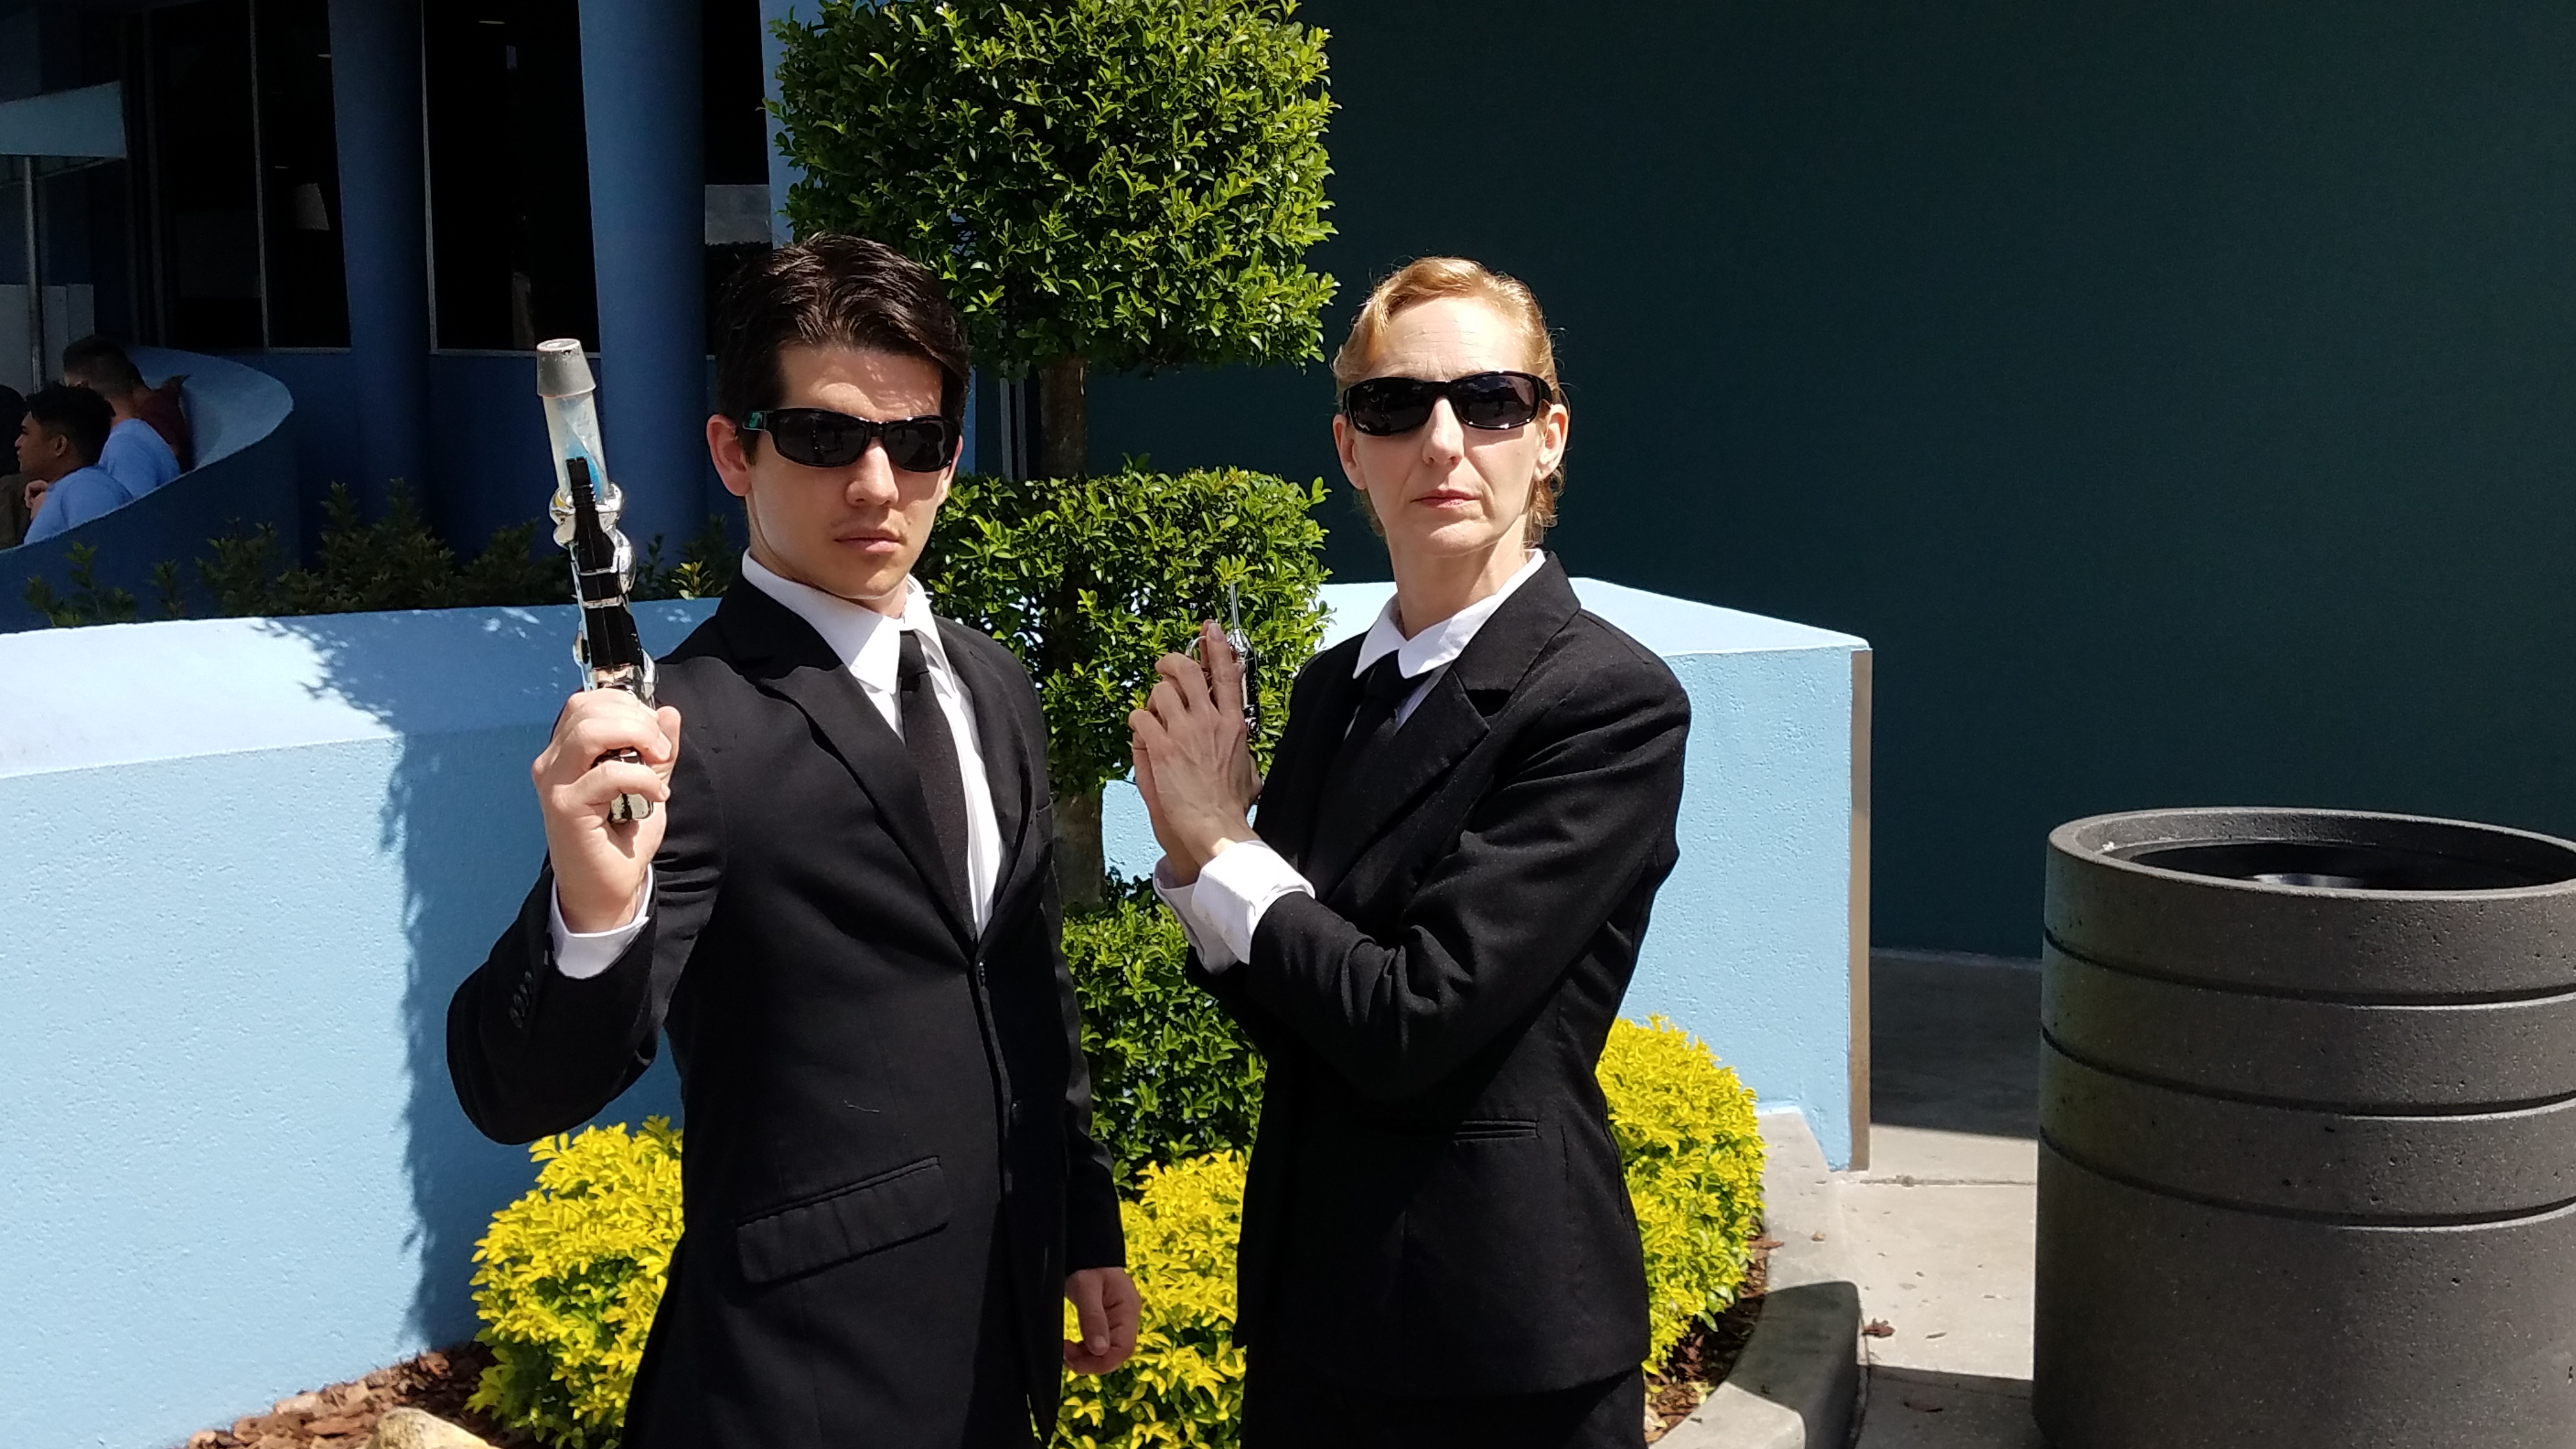 Men in Black (MIB) Agents at Universal Studios in Orlando, Florida - by unofficialuniversal.com.